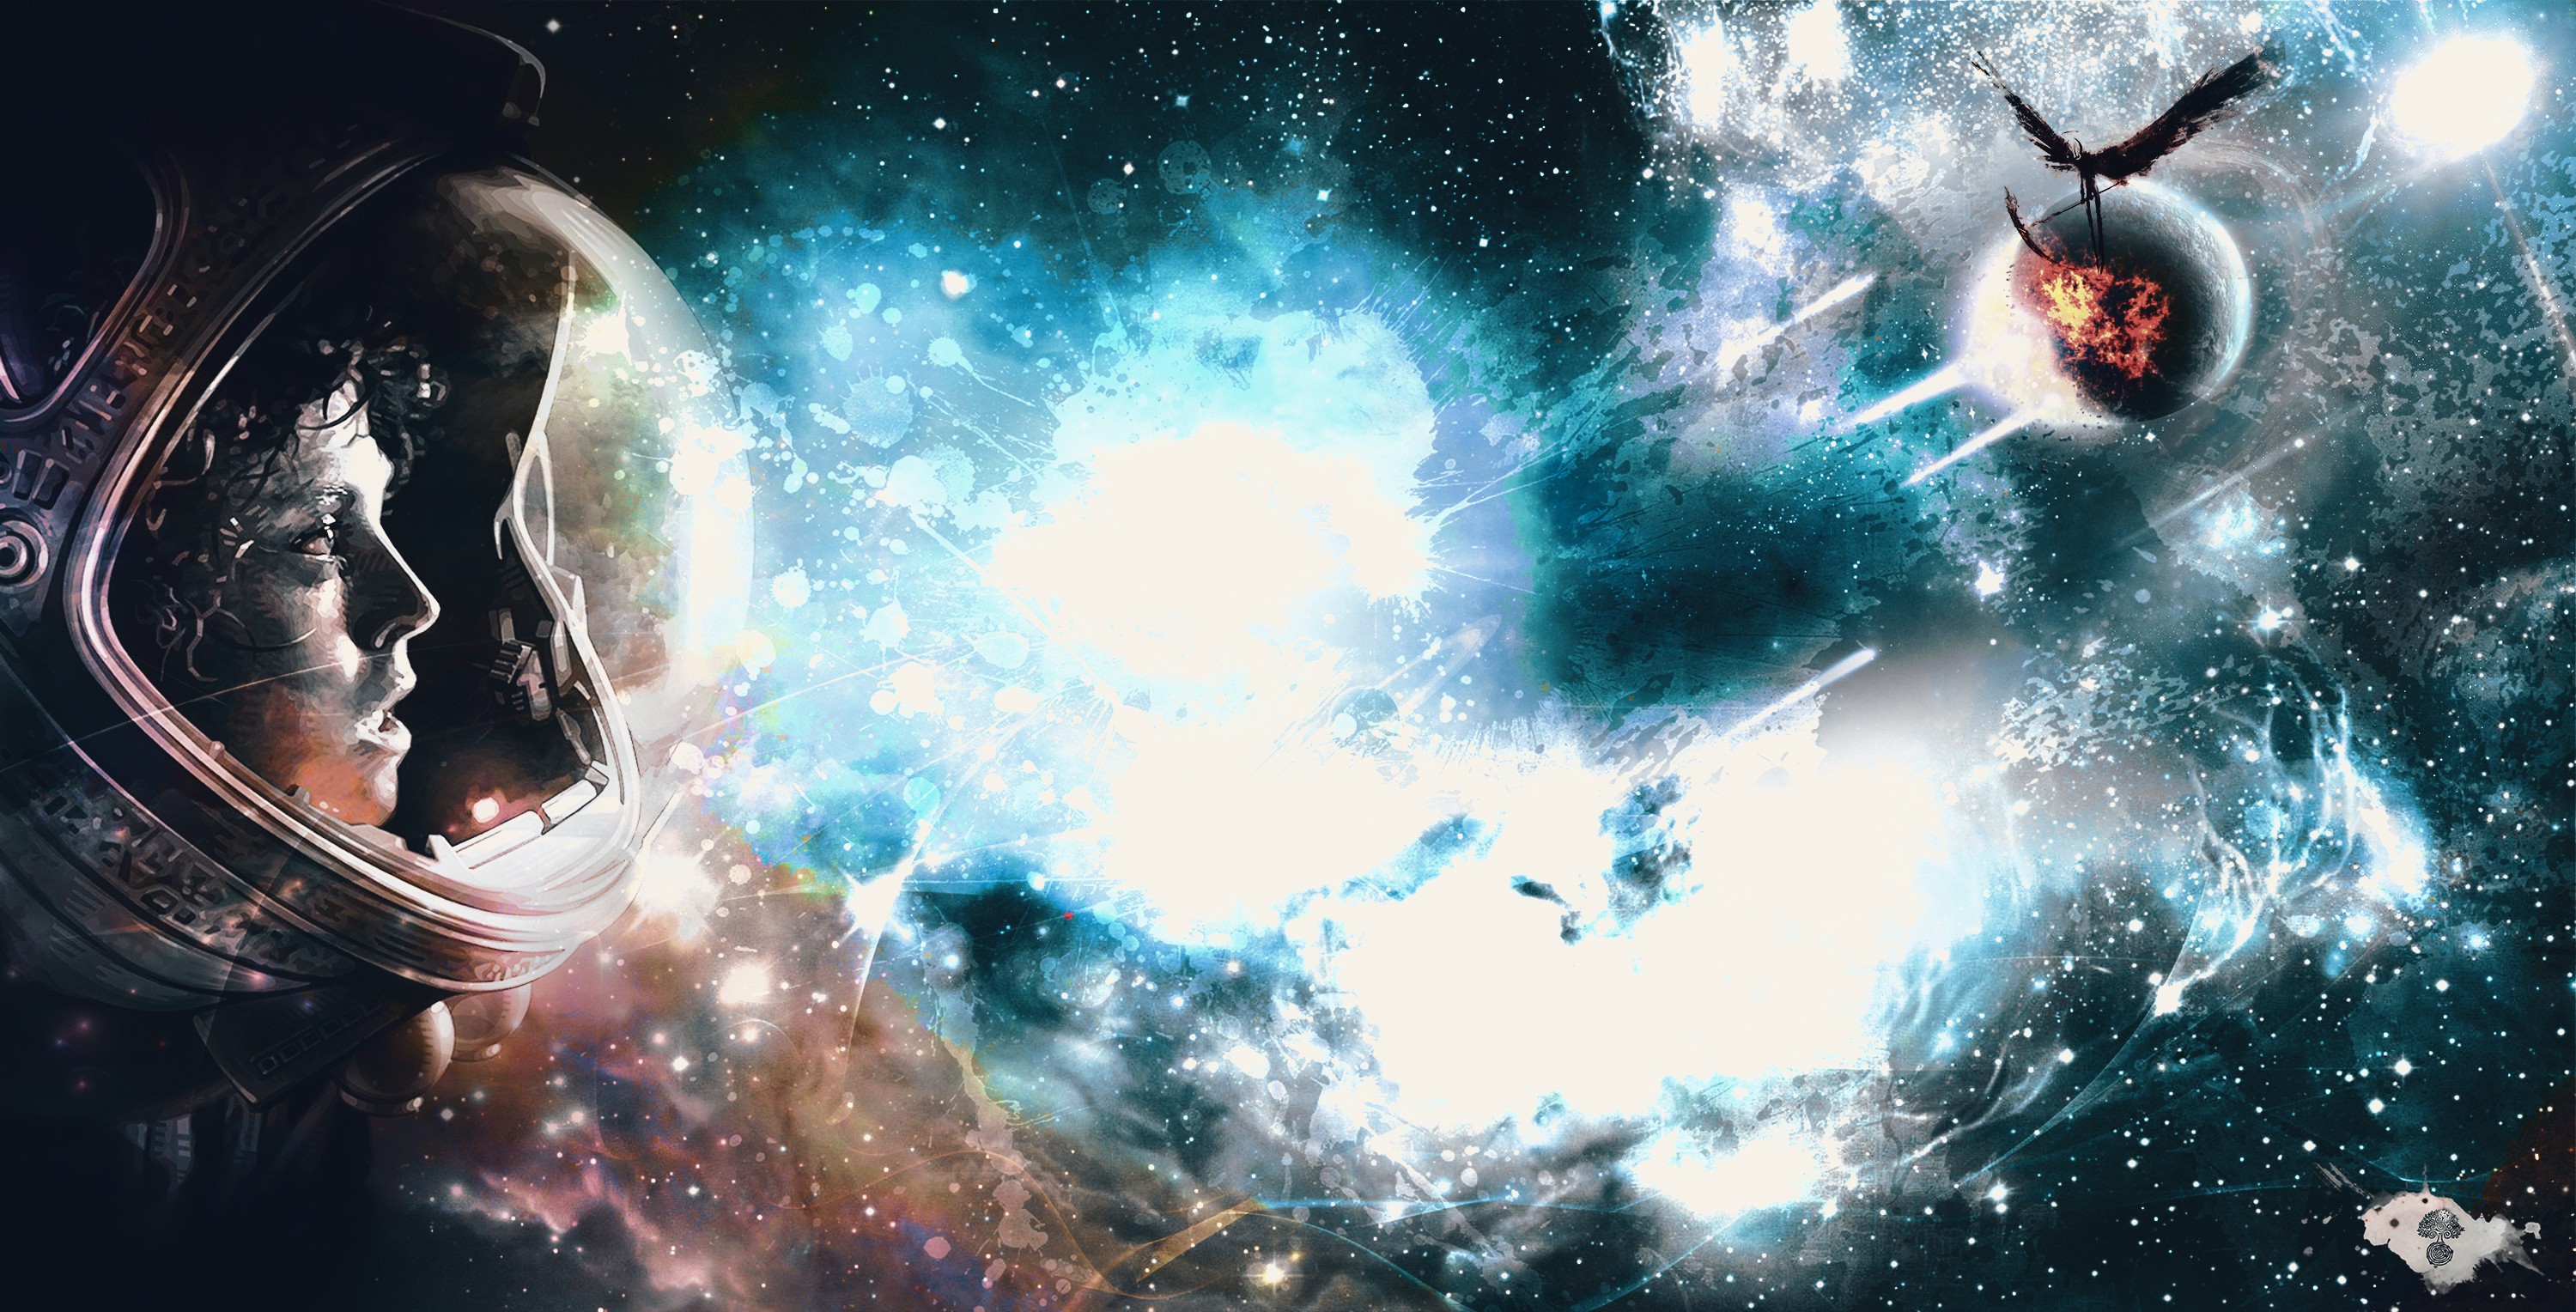 Space Art Space Astronaut Galaxy Planet Death Ellen Ripley 3000x1528